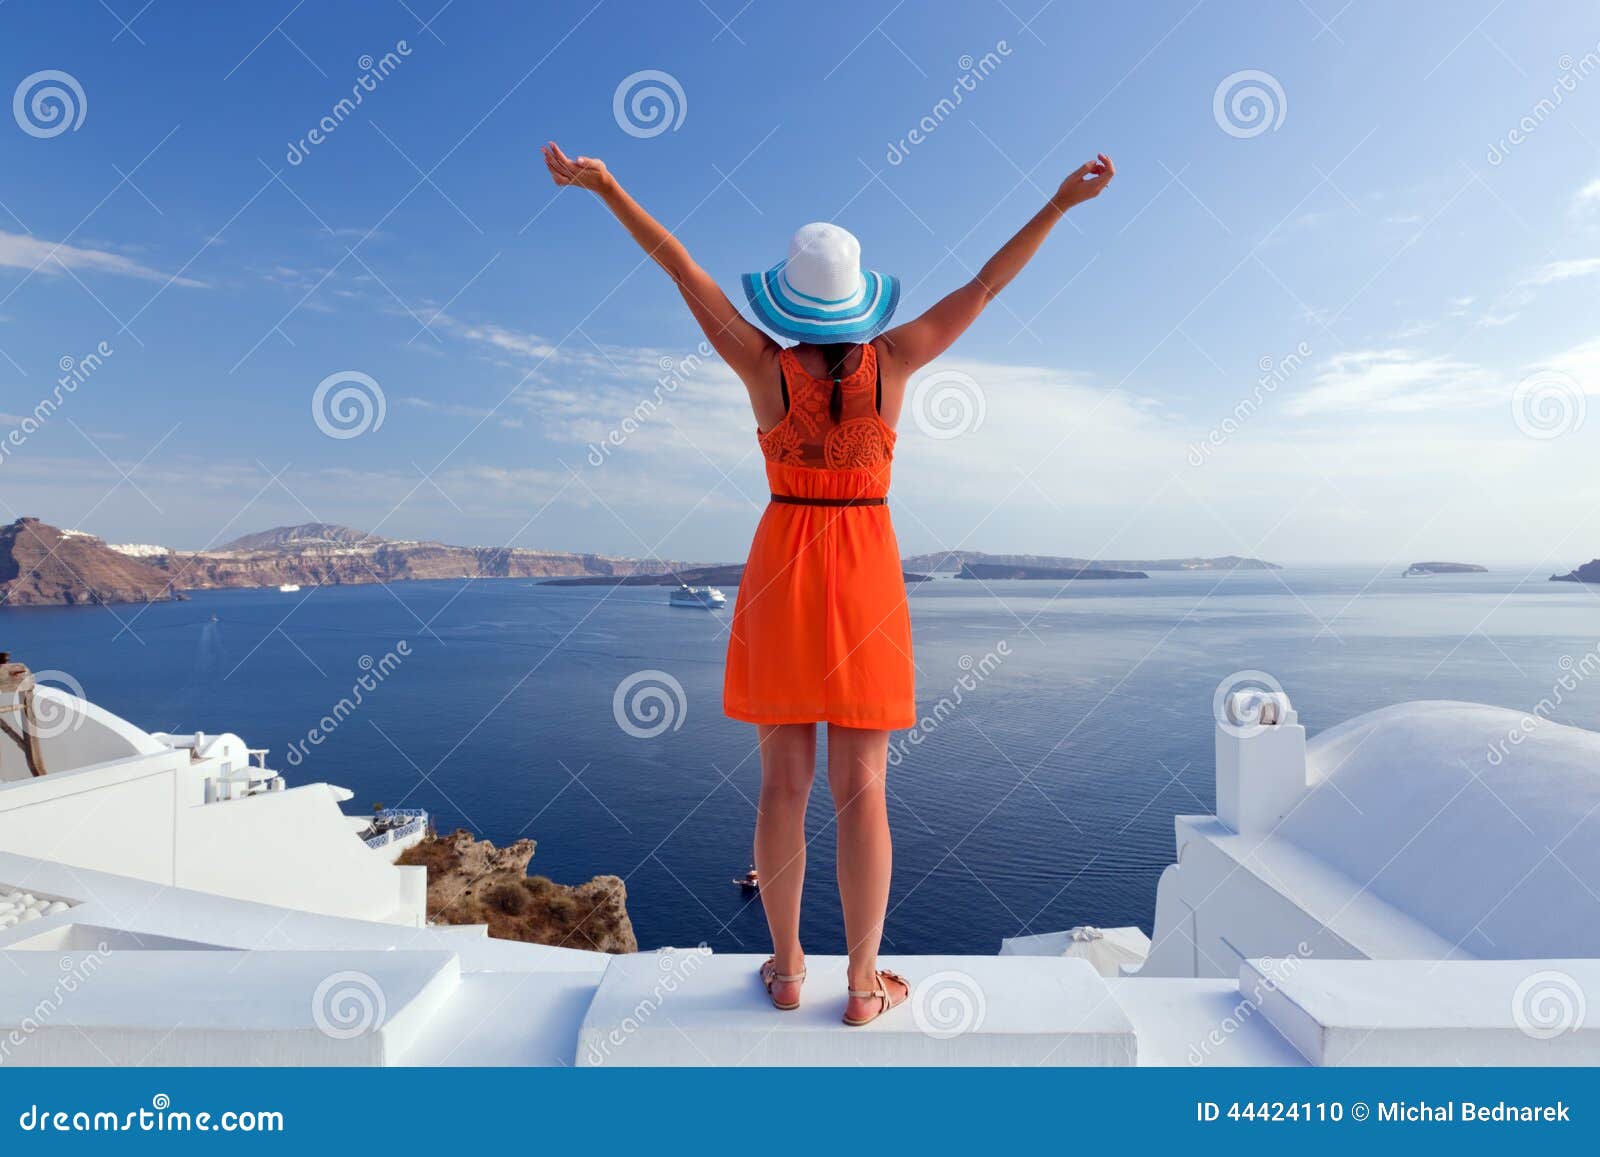 happy tourist woman on santorini island, greece. travel